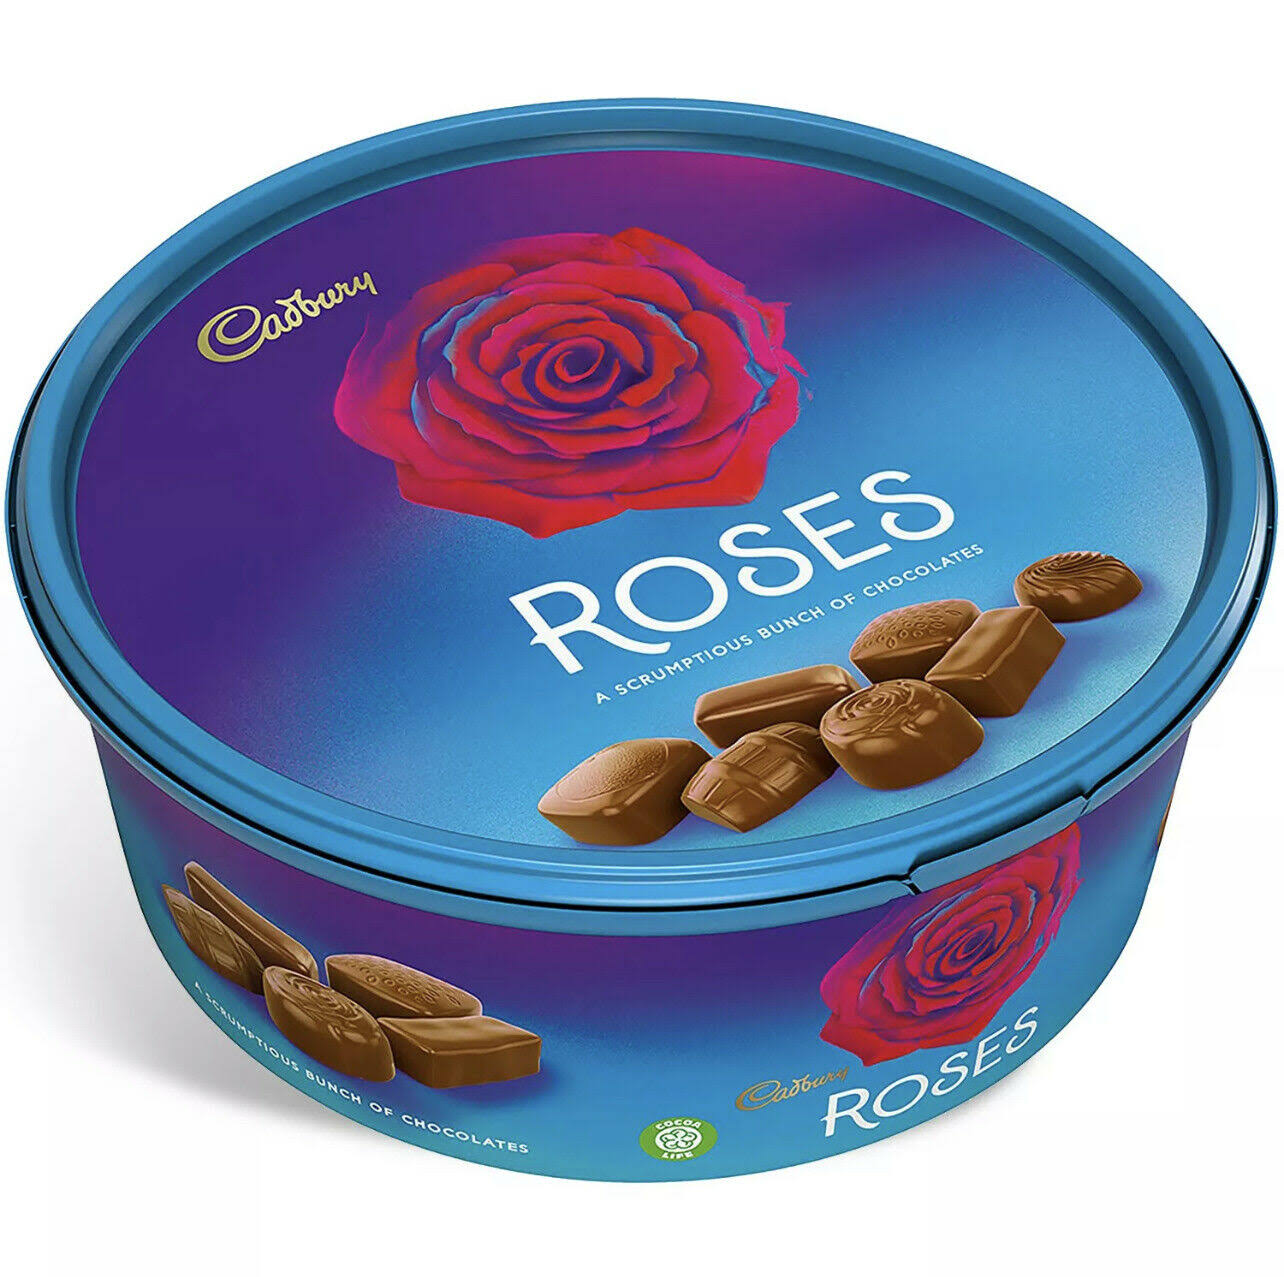 Cadbury Roses Chocolate Tub 600g